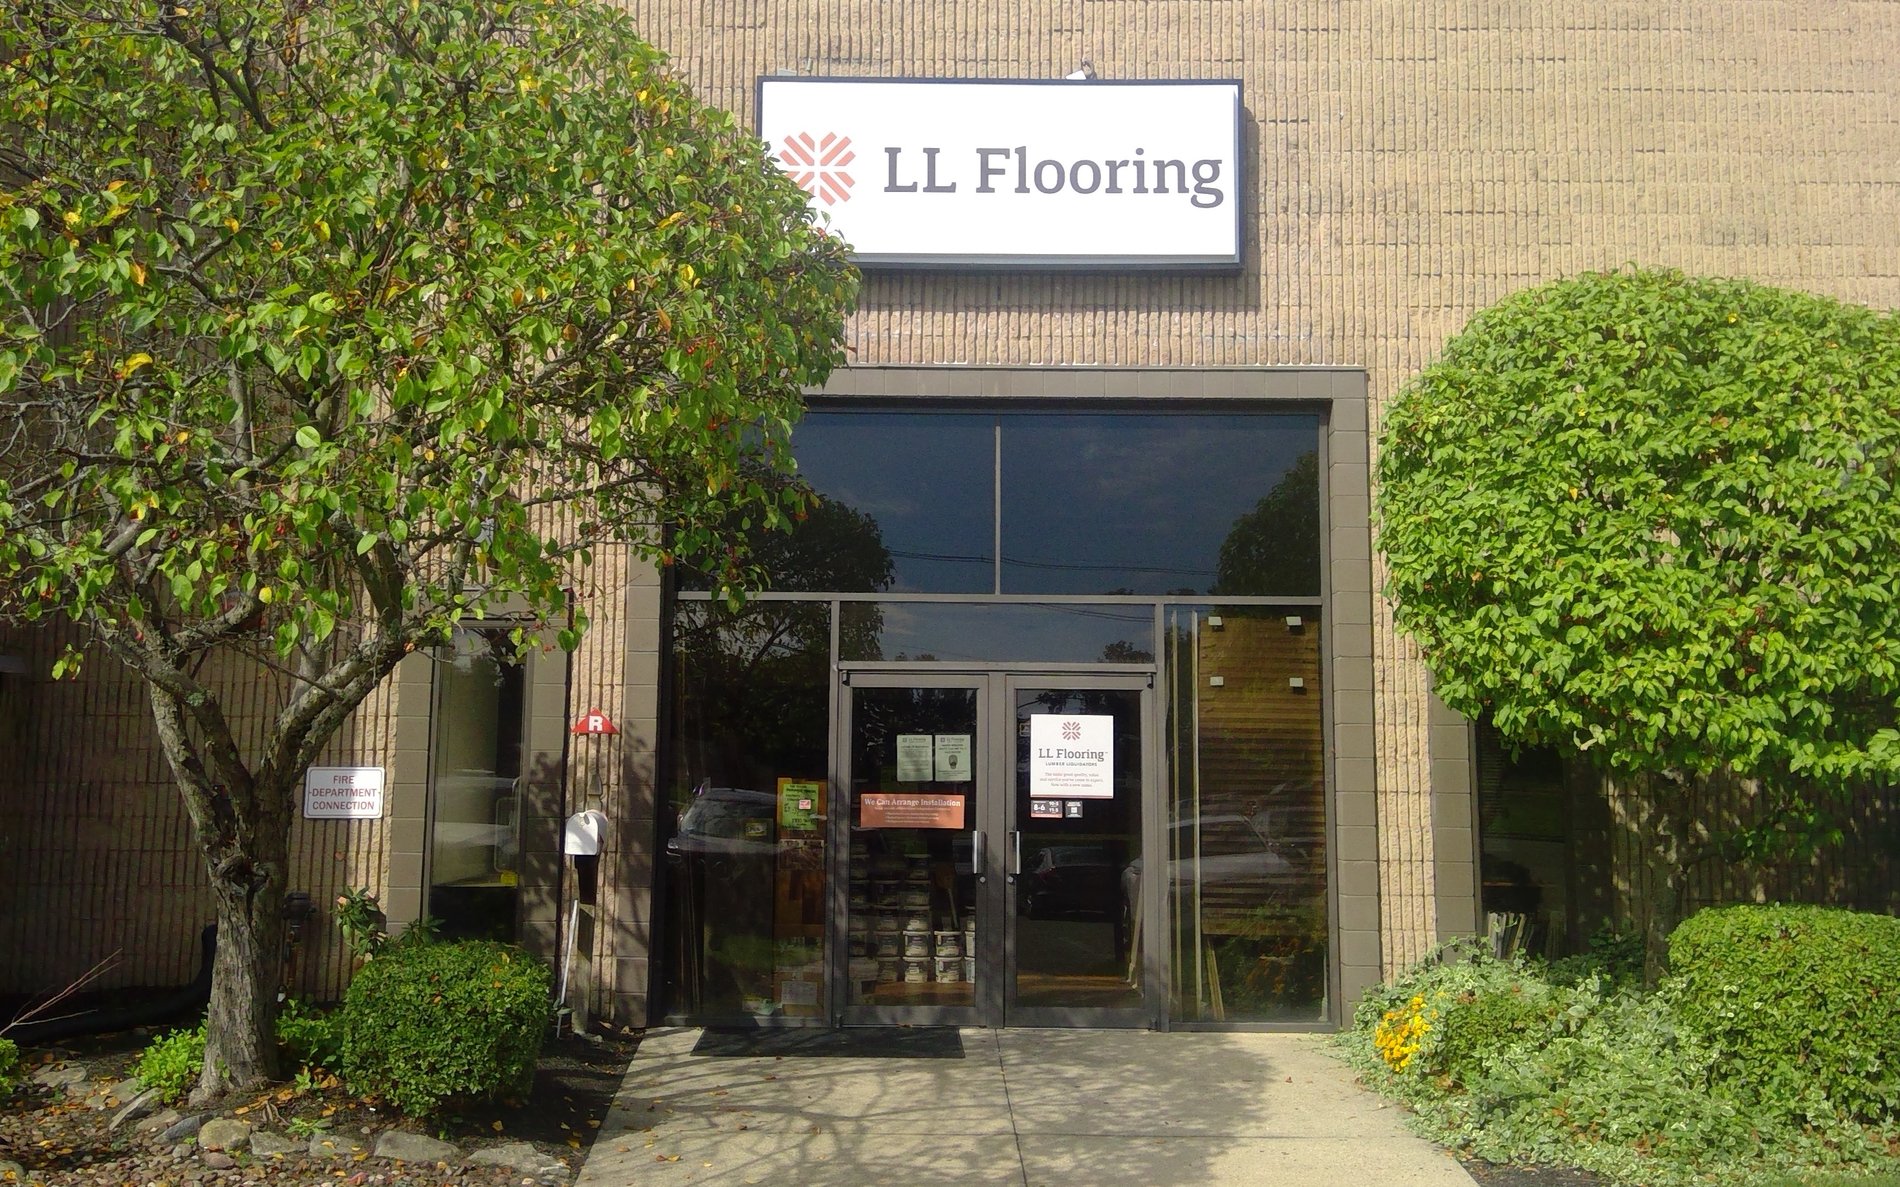 LL Flooring #1197 Fairfield | 311 RT 46 | Storefront